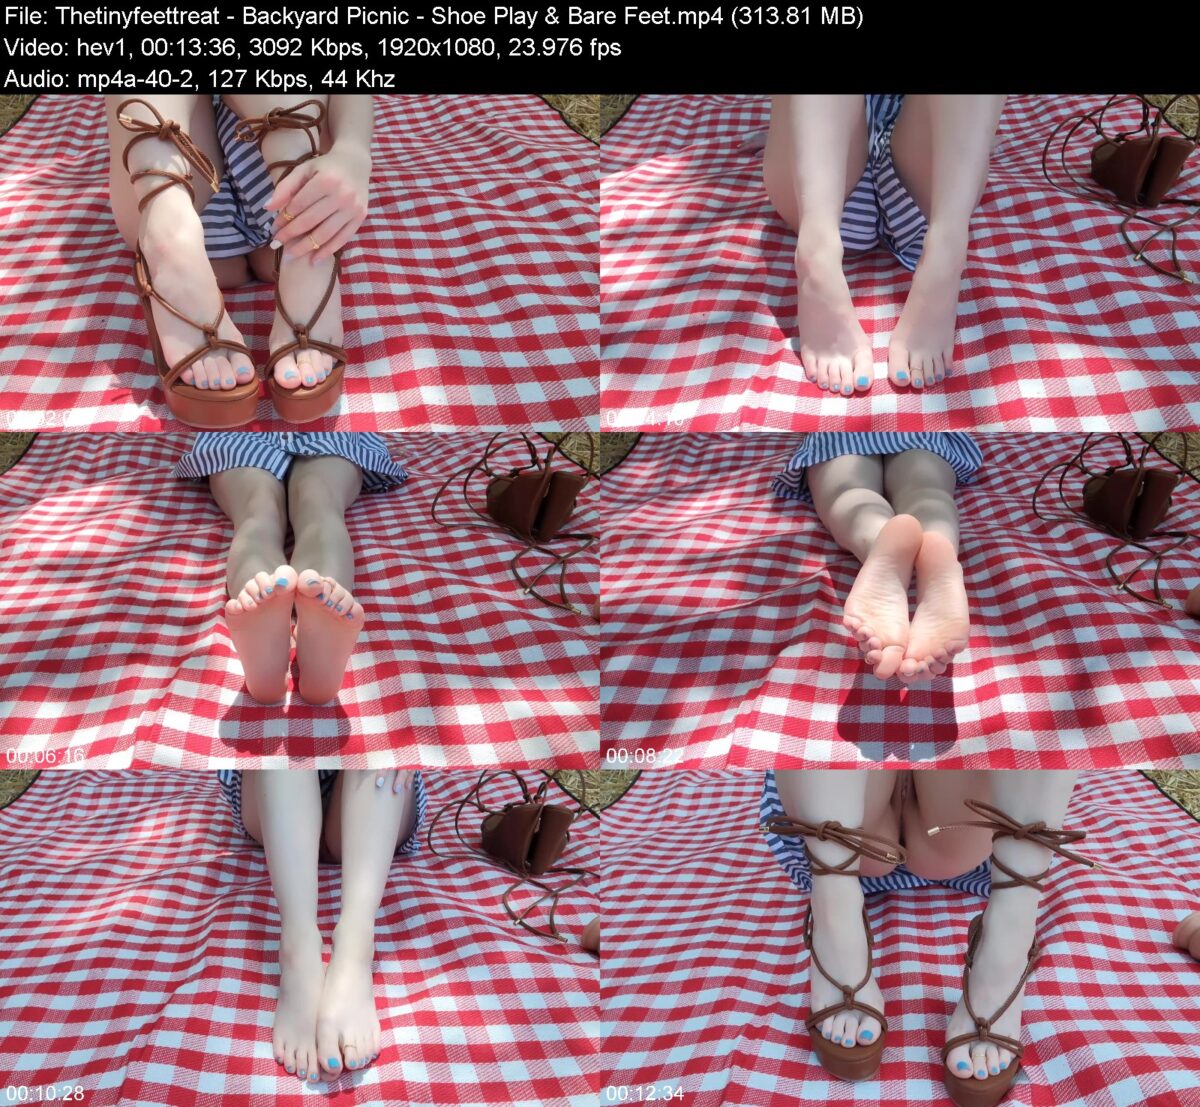 Actress: Thetinyfeettreat. Title and Studio: Backyard Picnic – Shoe Play & Bare Feet